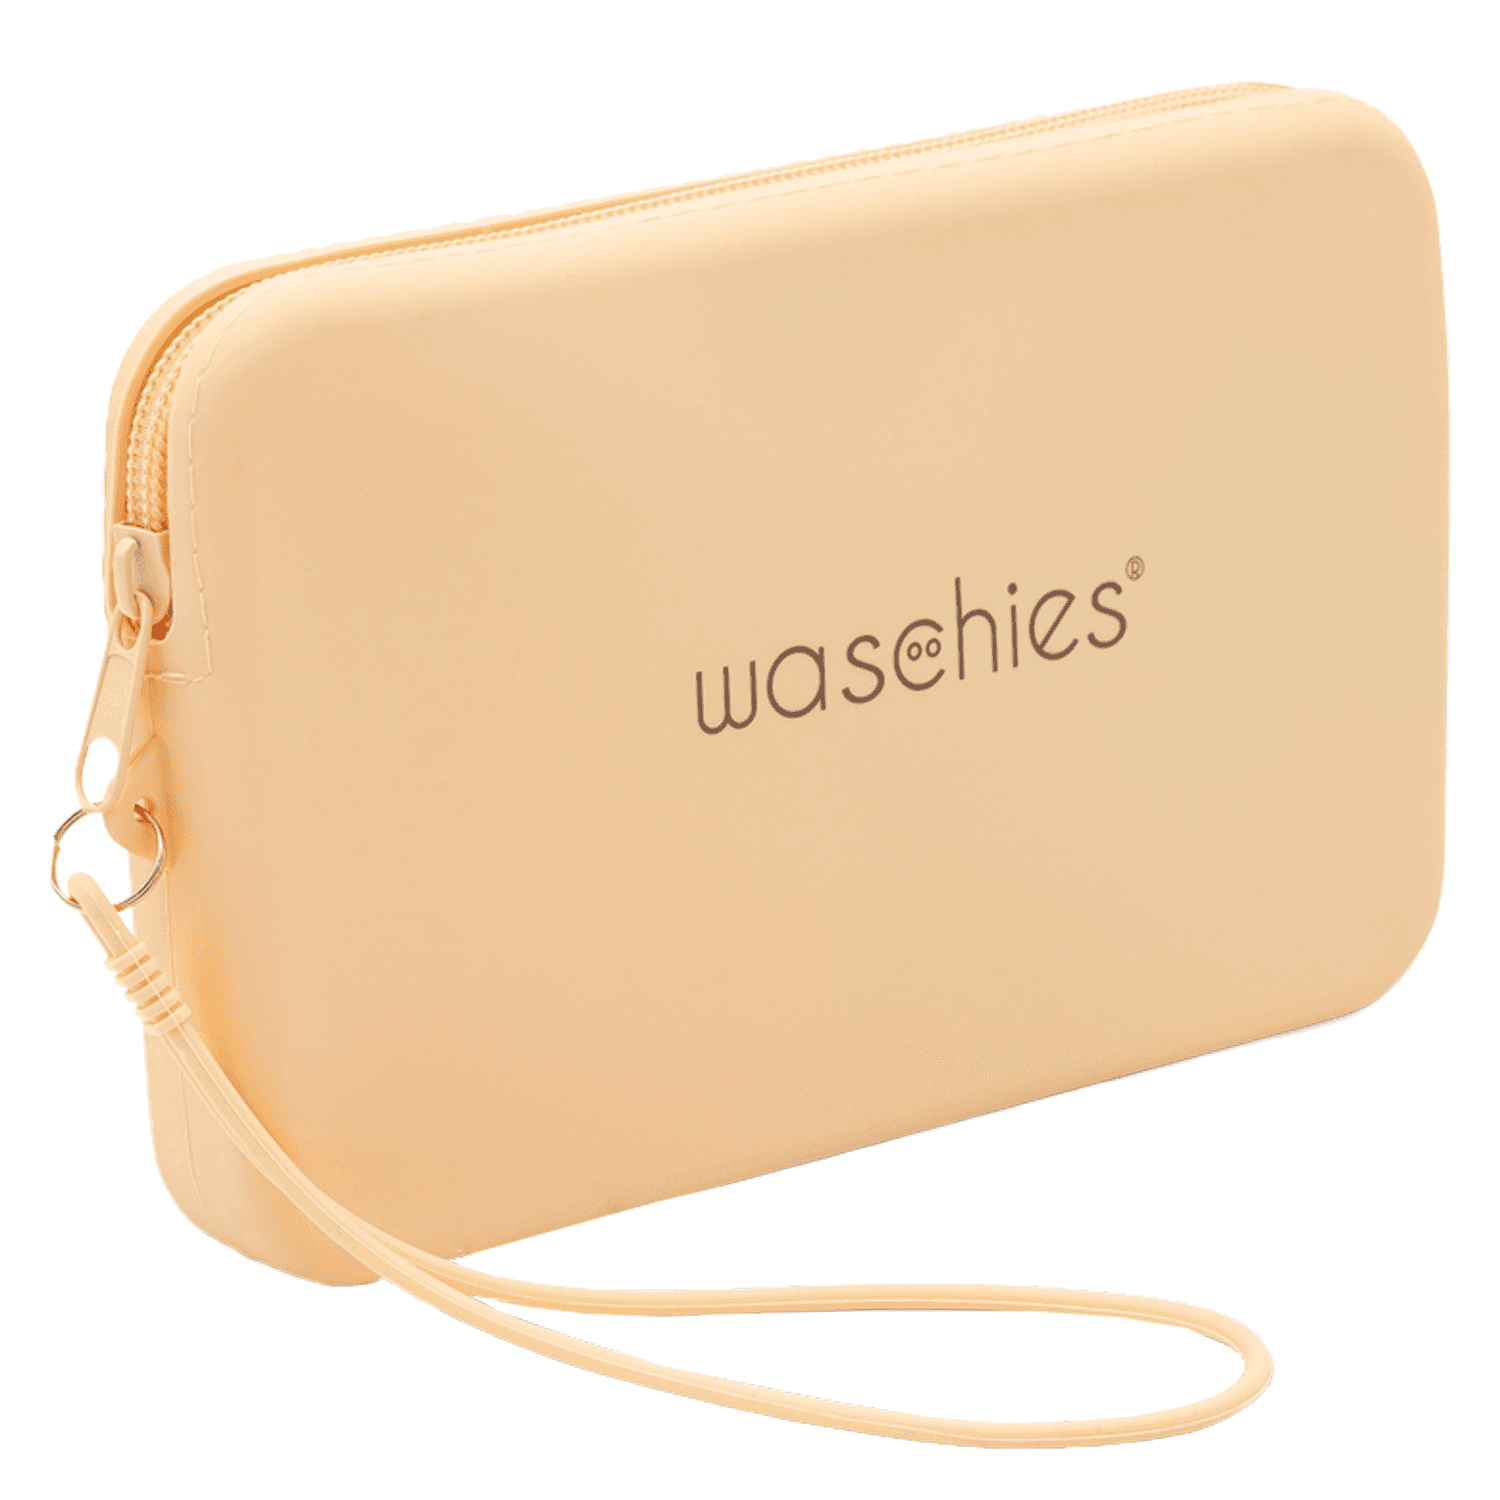 Waschies Faceline - Travel Bag Sand Edition